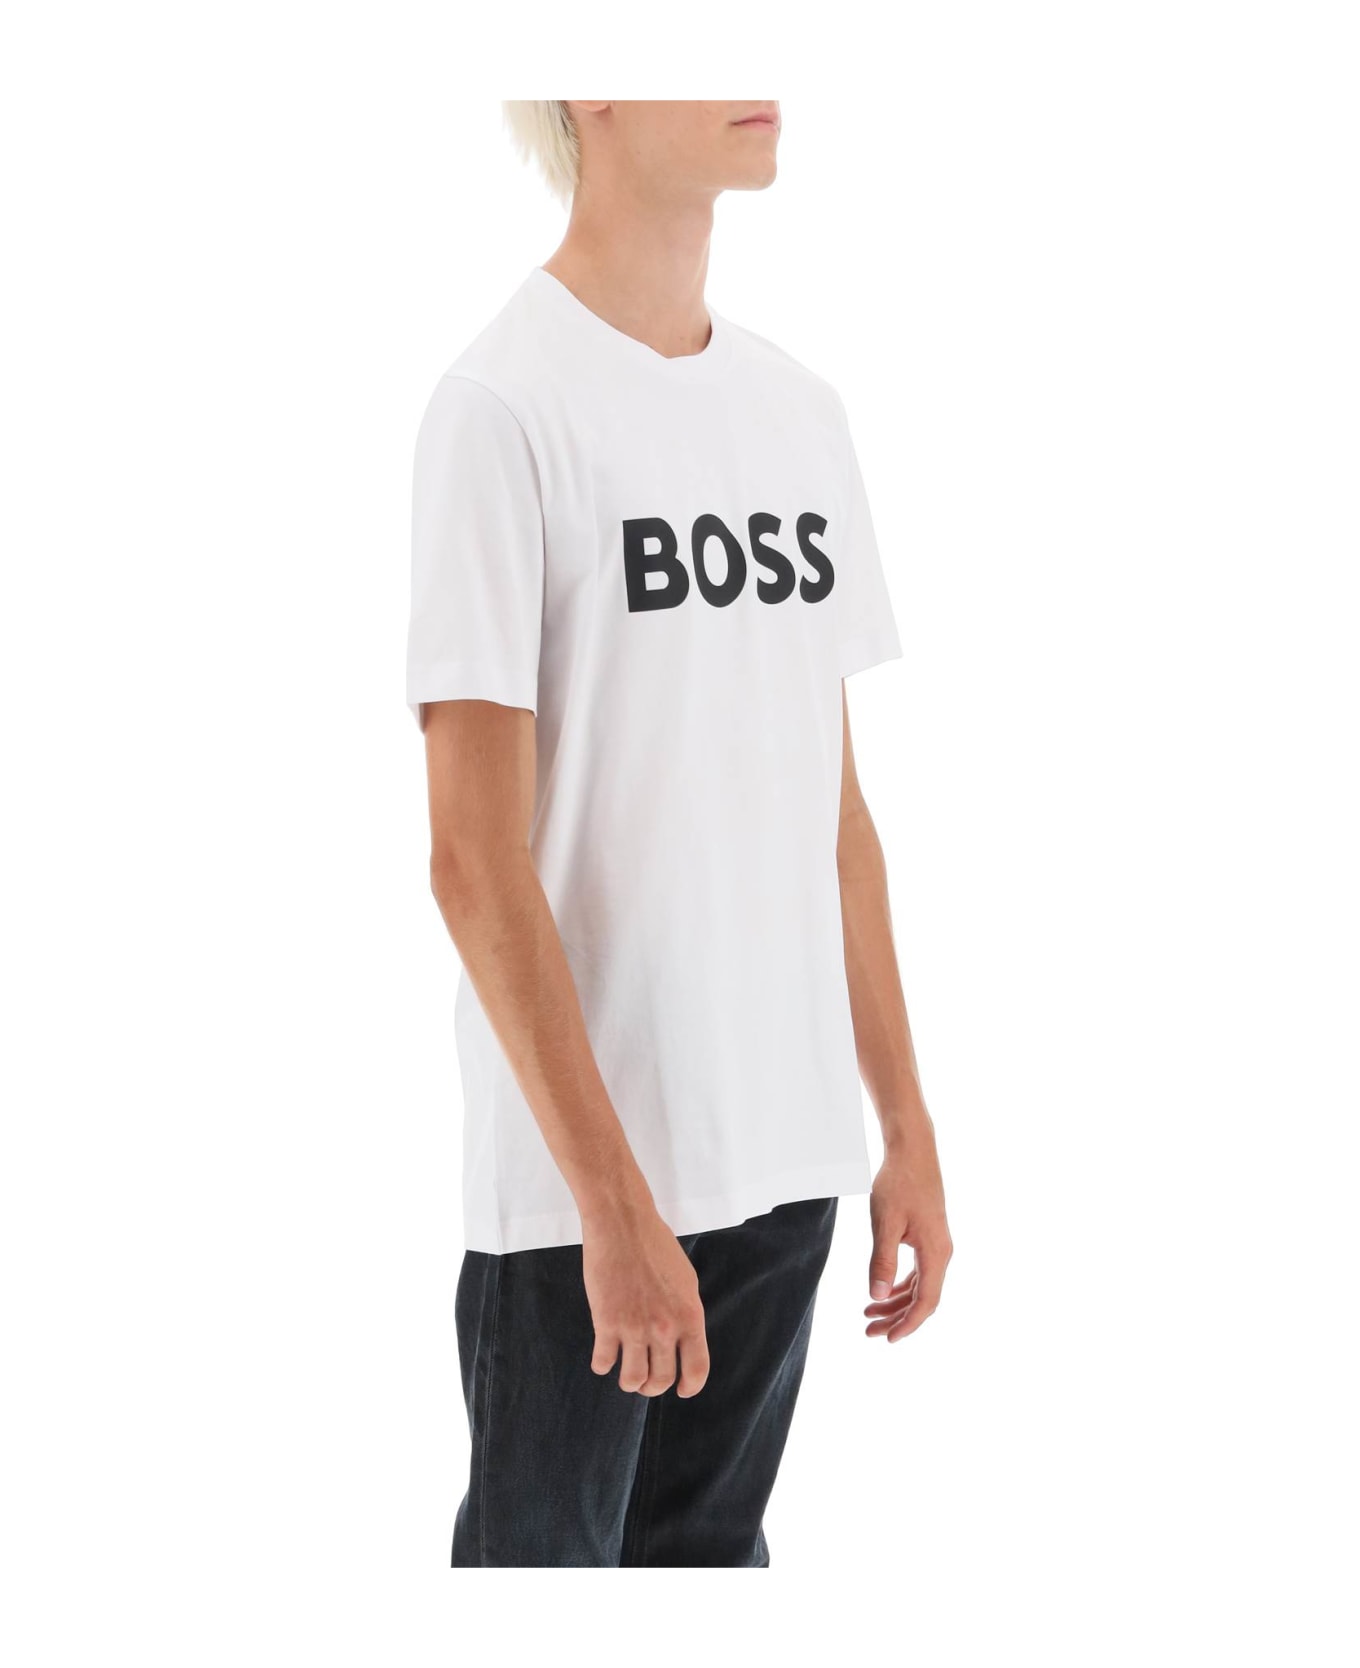 Hugo Boss Tiburt 354 Logo Print T-shirt - White シャツ